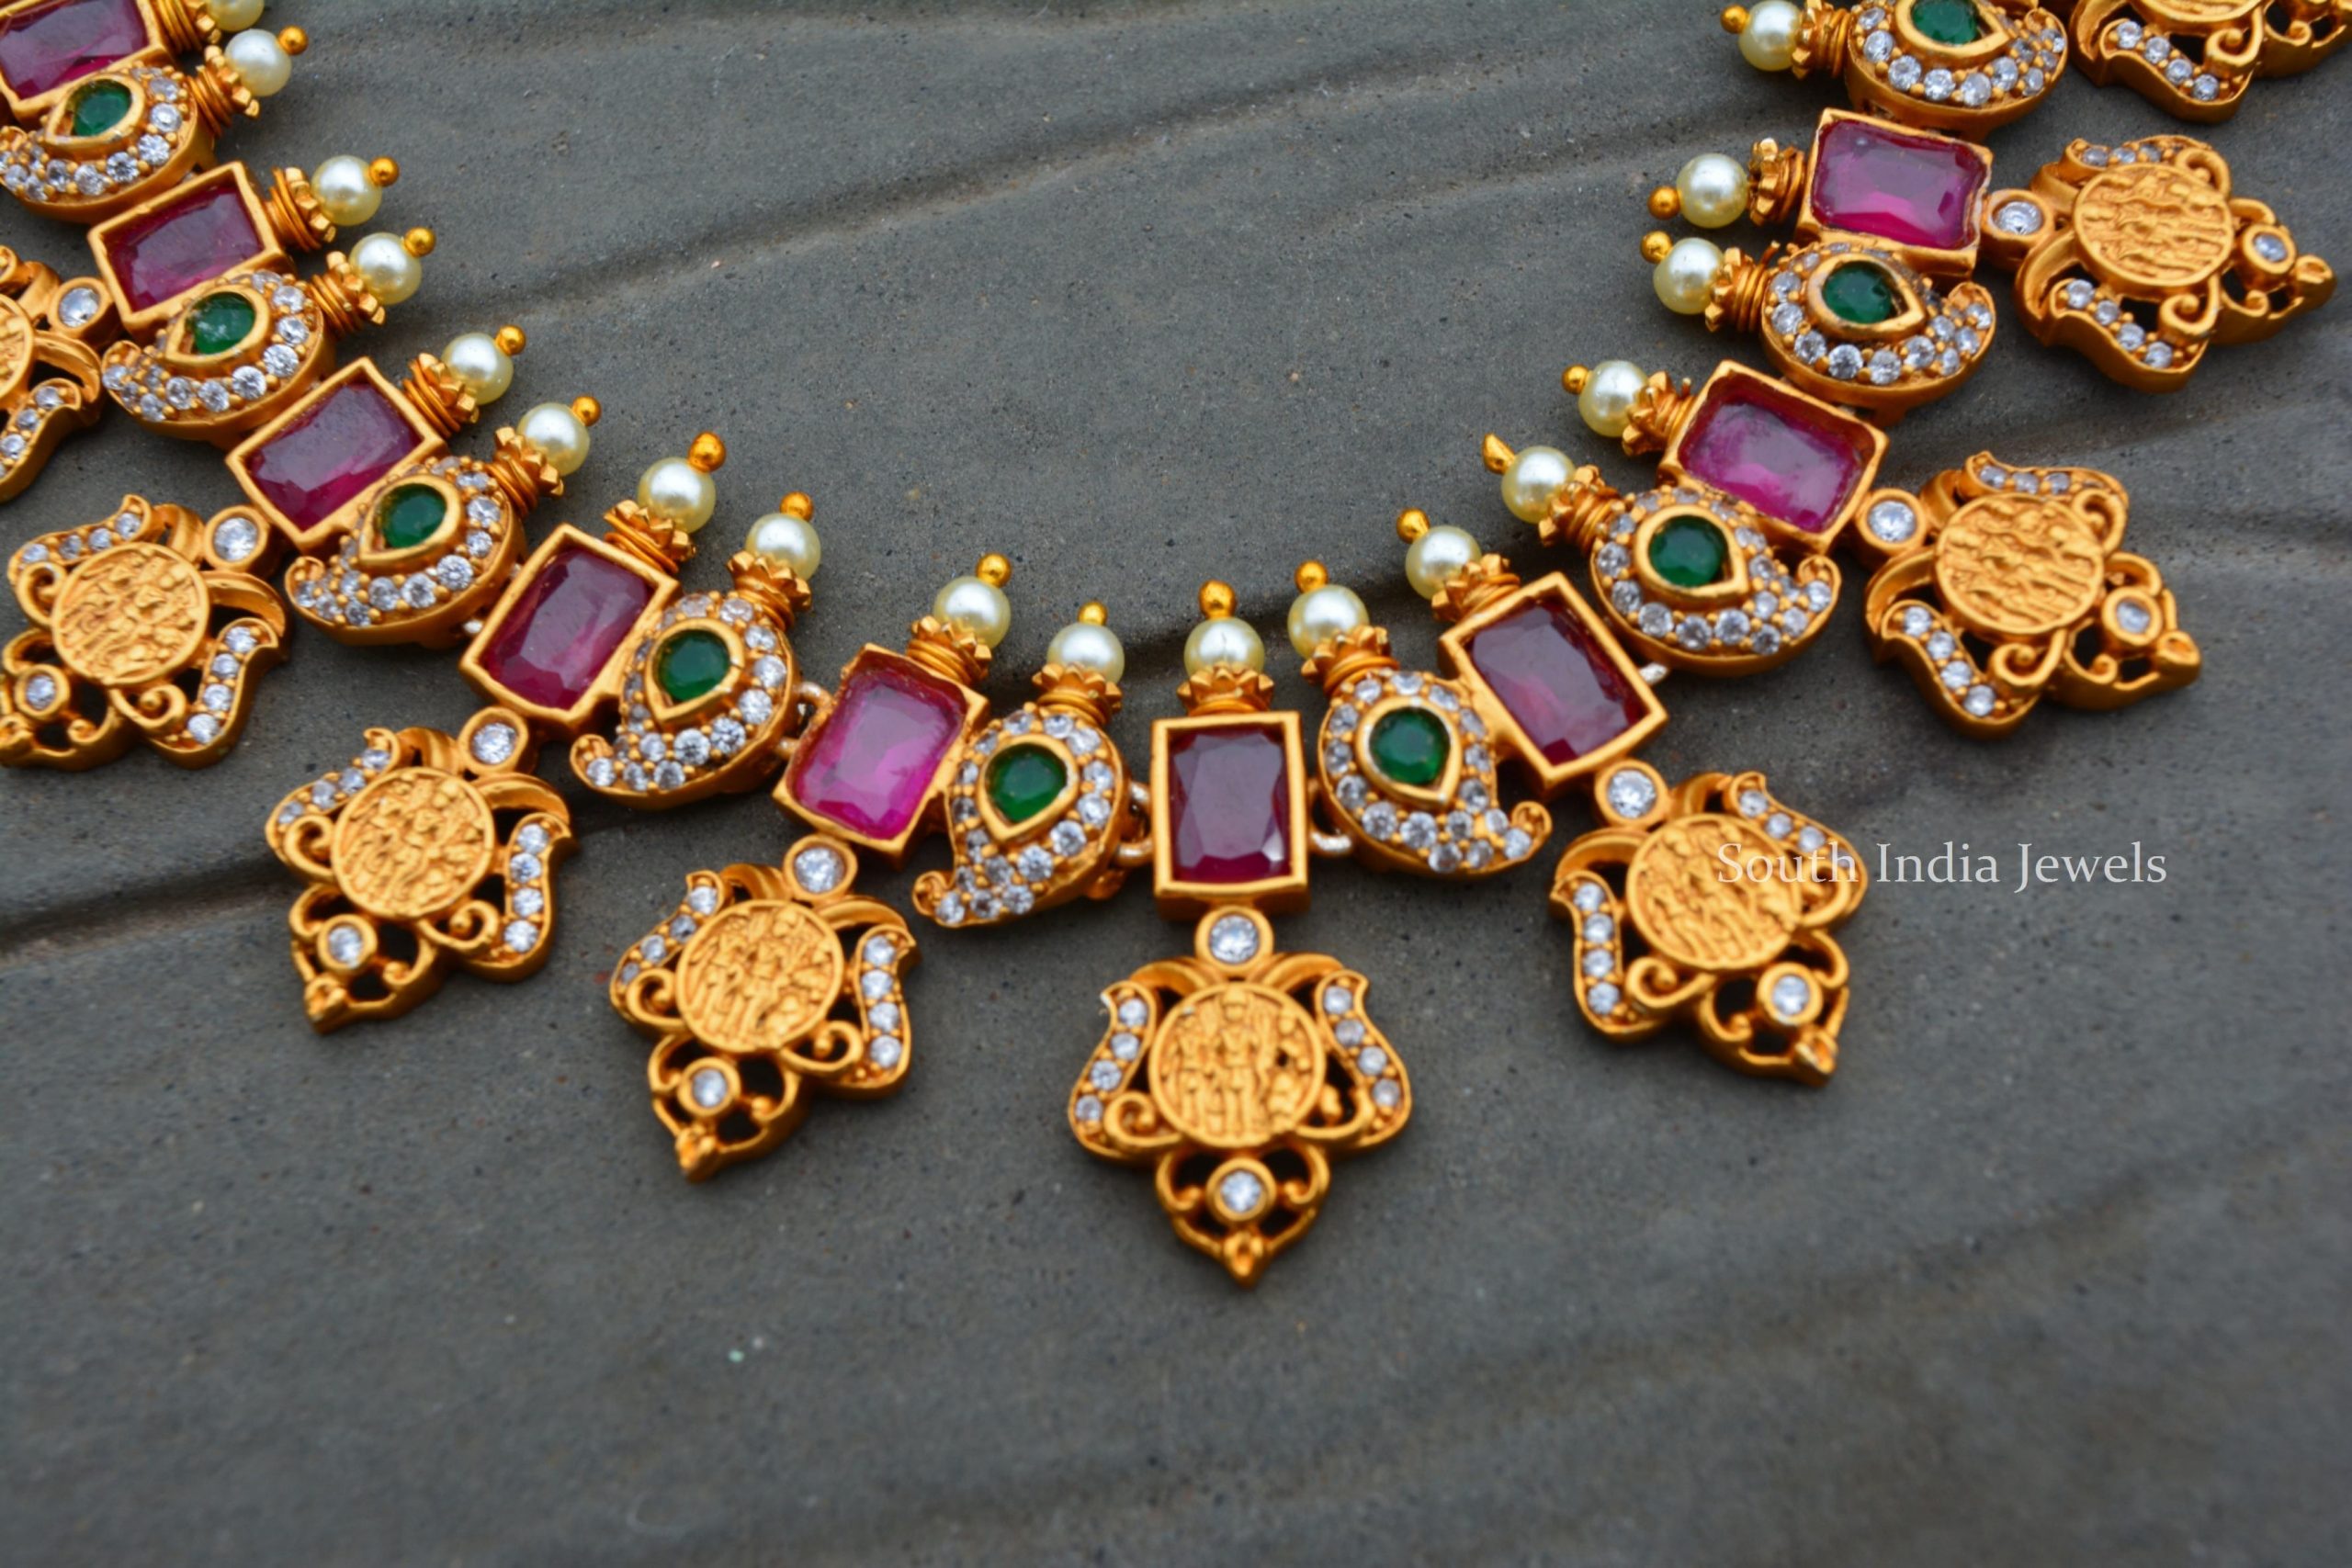 Gorgeous Ram Parivar AD Stone Haram - South India Jewels